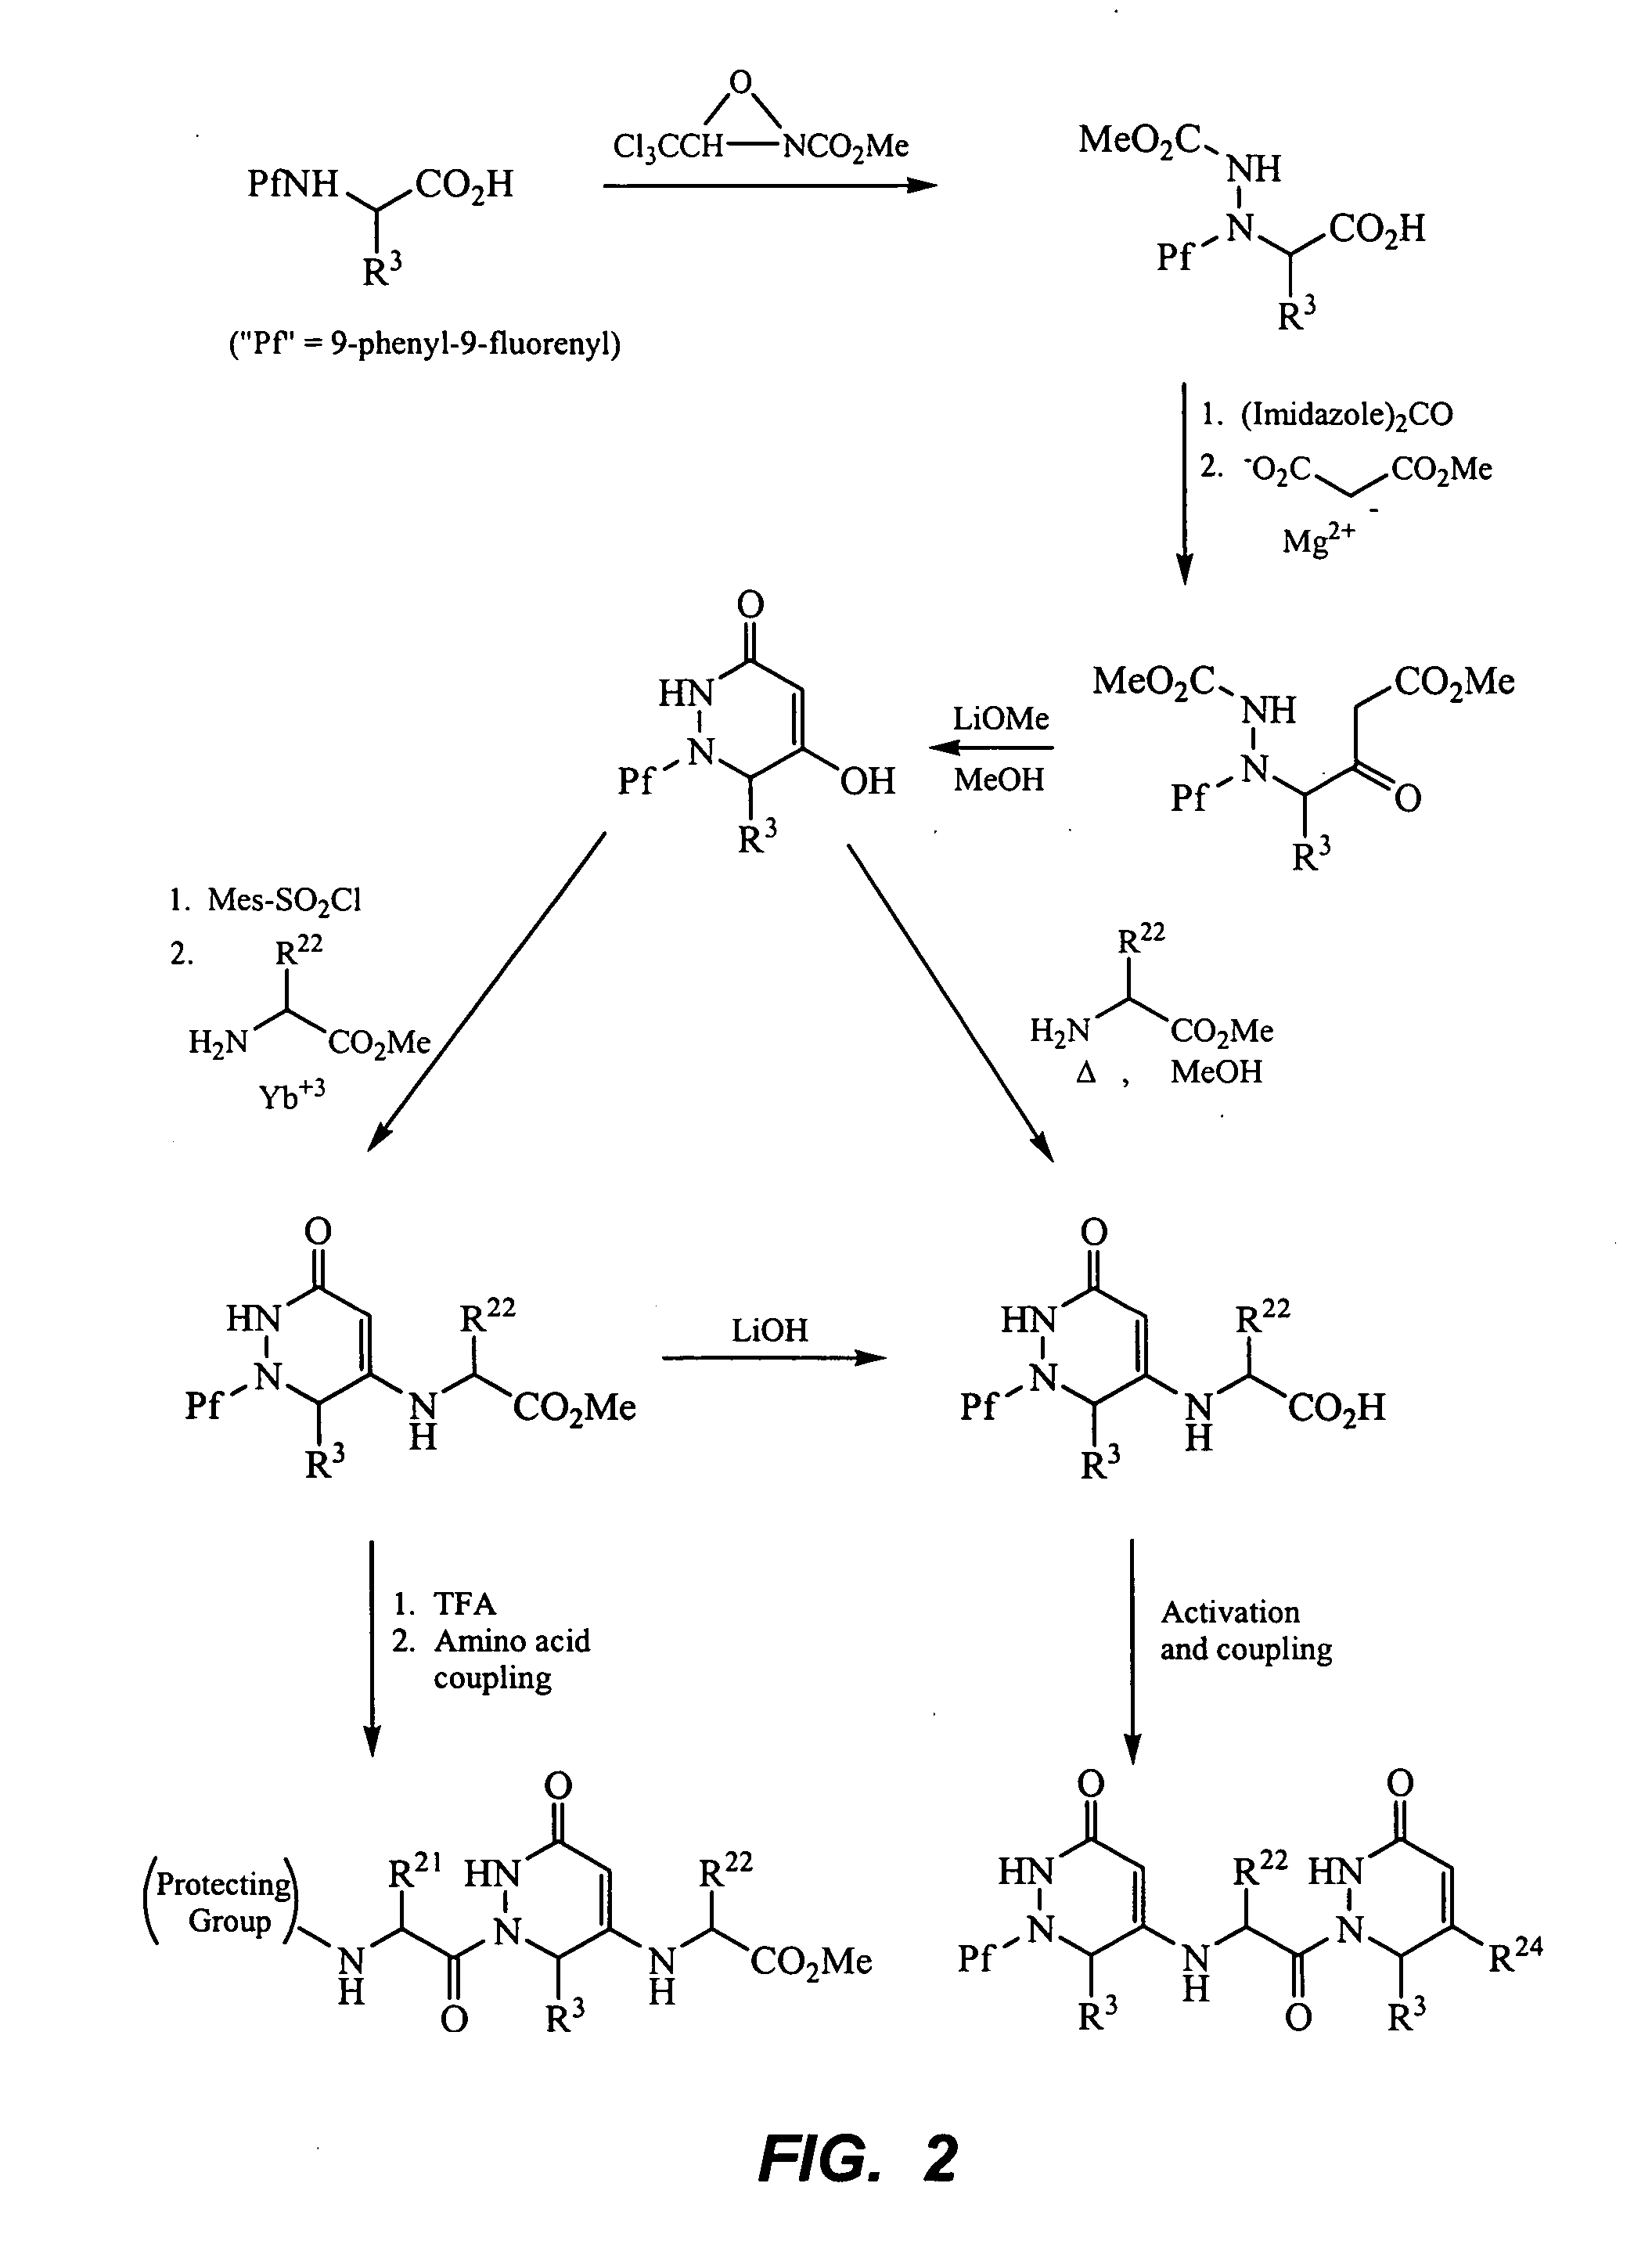 Peptide beta-strand mimics based on pyridinones, pyrazinones, pyridazinones, and triazinones